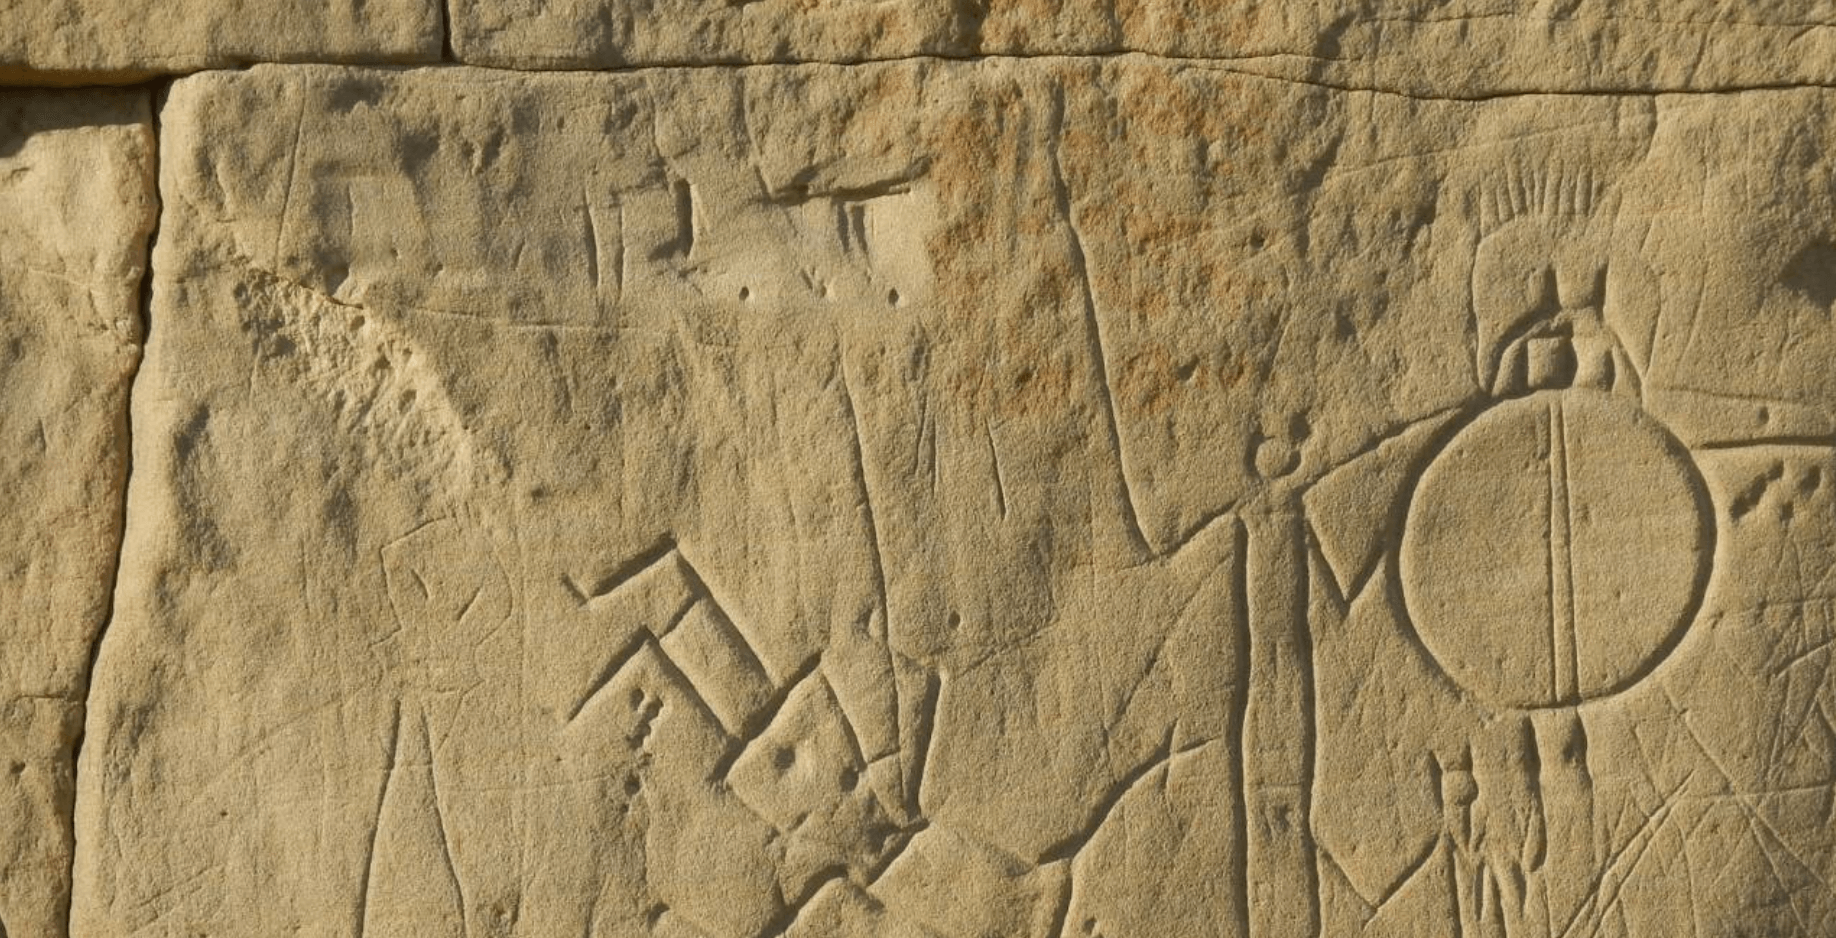 stone writing